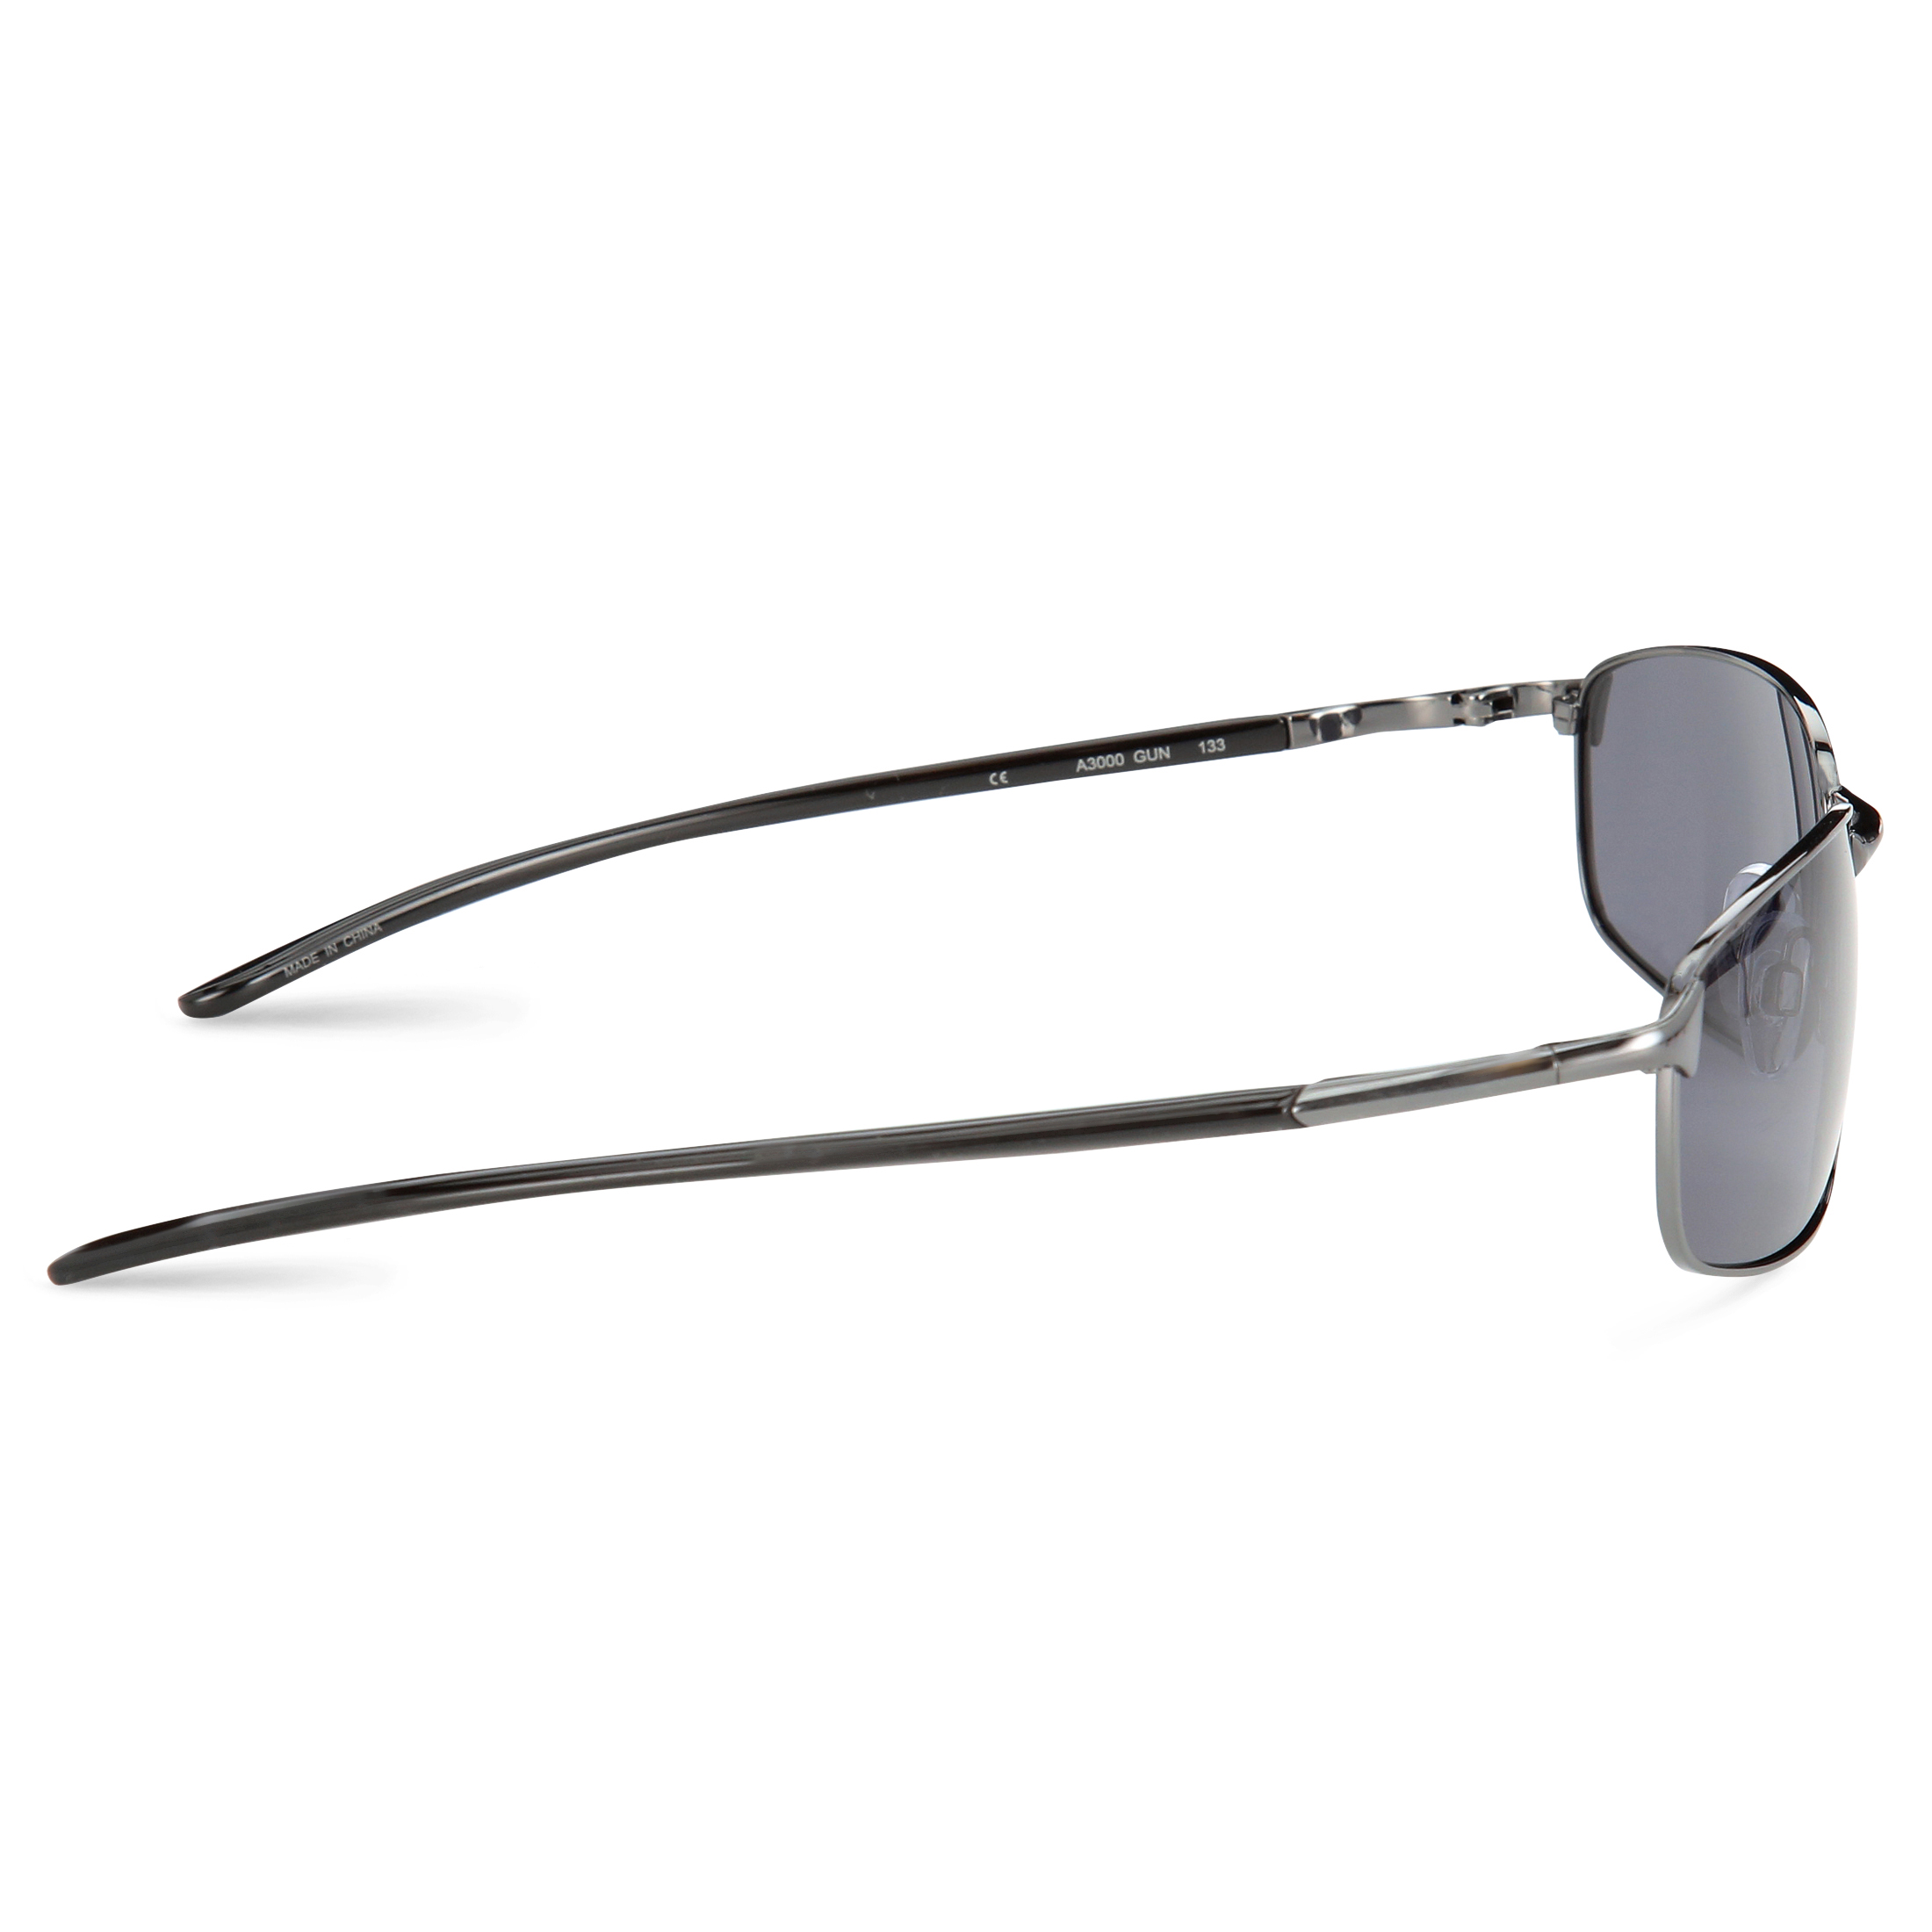 DNA Polarized Sunglasses, Unisex, A3000, Gun Metal, 60-14-133 - image 2 of 6